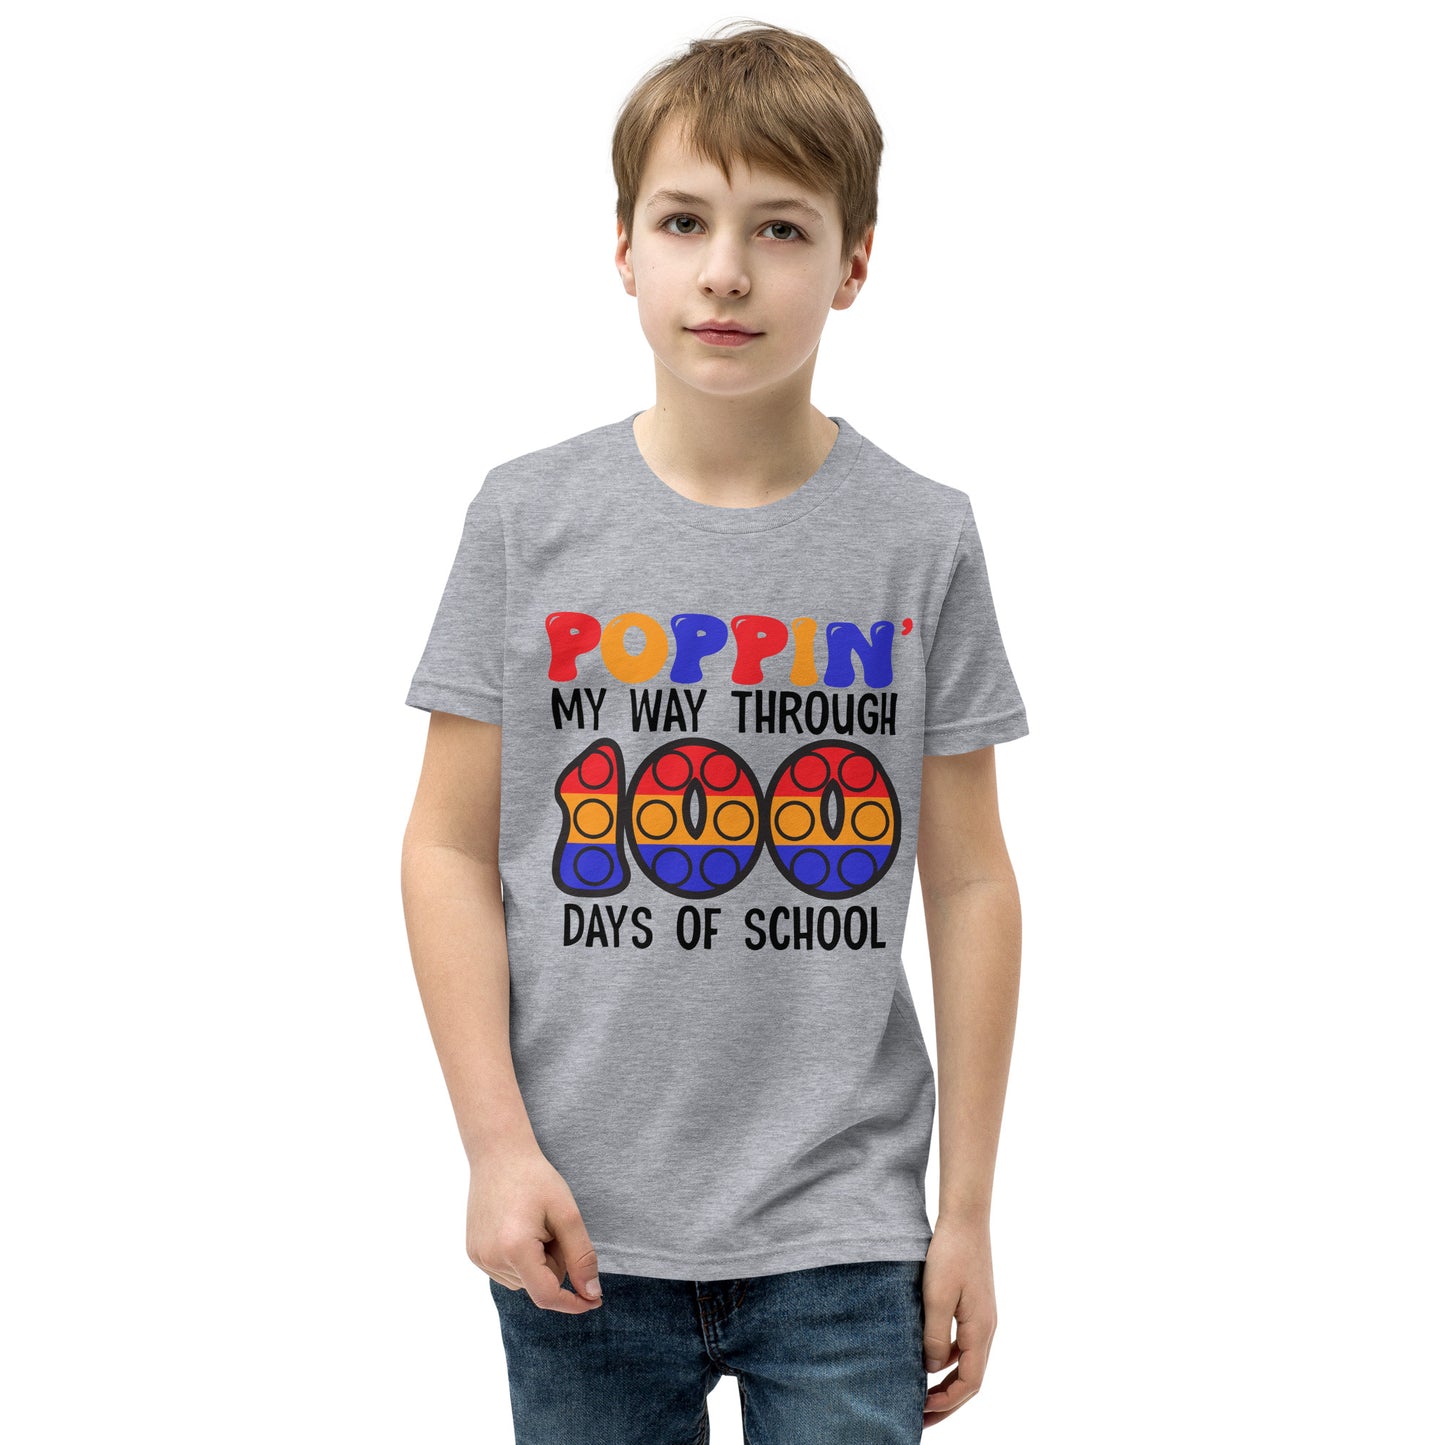 "Pop-it" 100 Days of School Youth T-Shirt